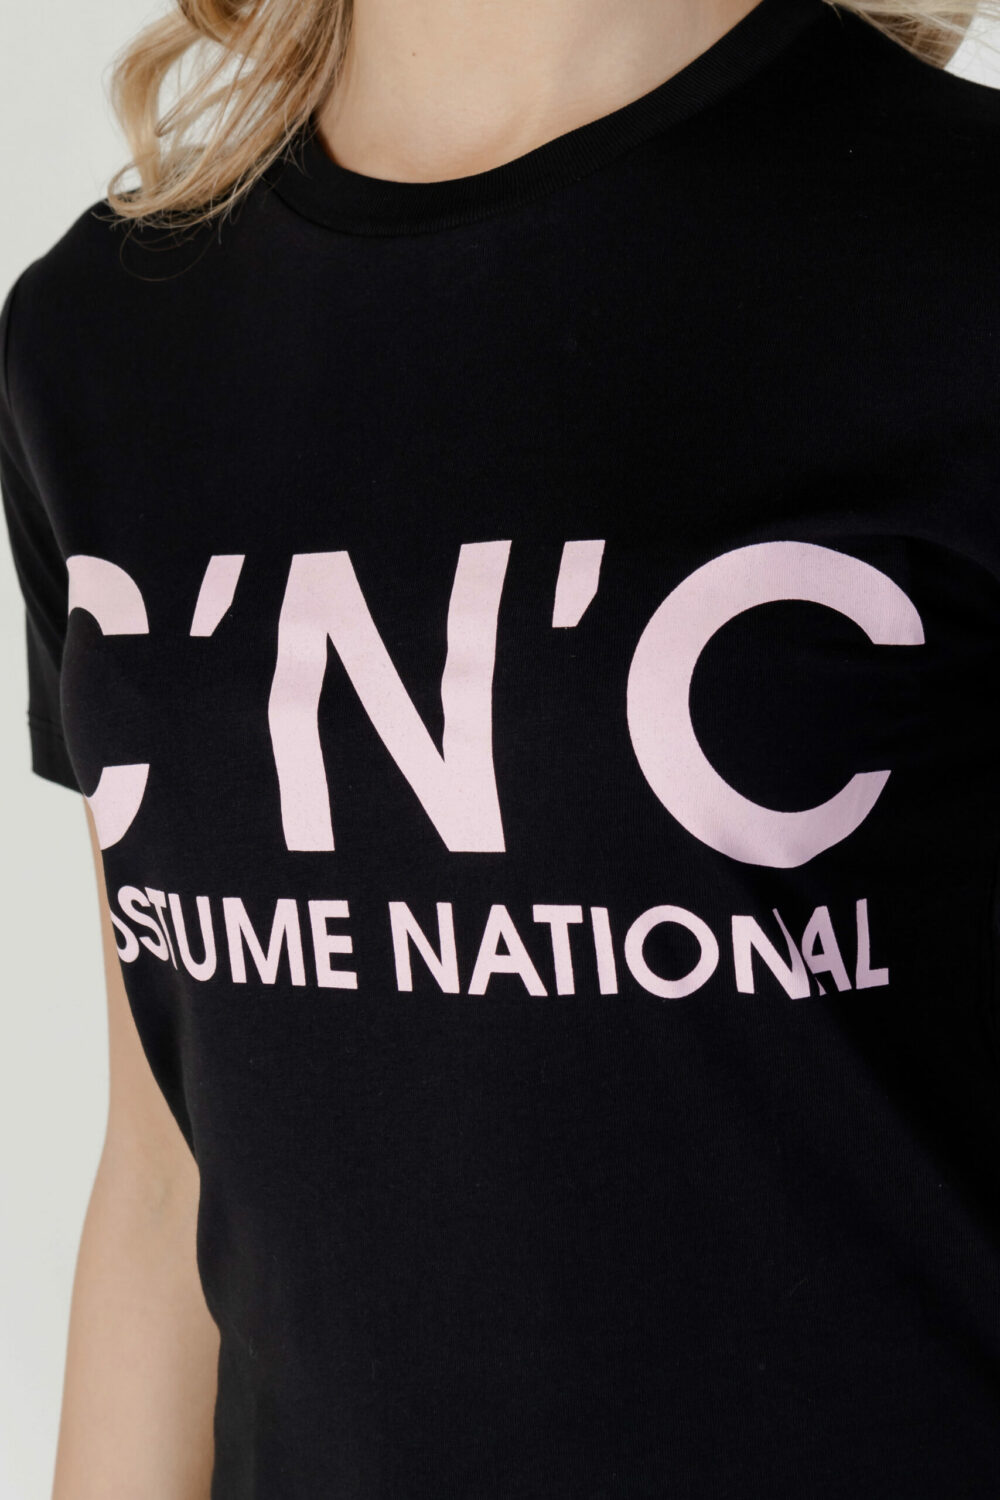 T-shirt CNC Costume National Nero - Foto 2